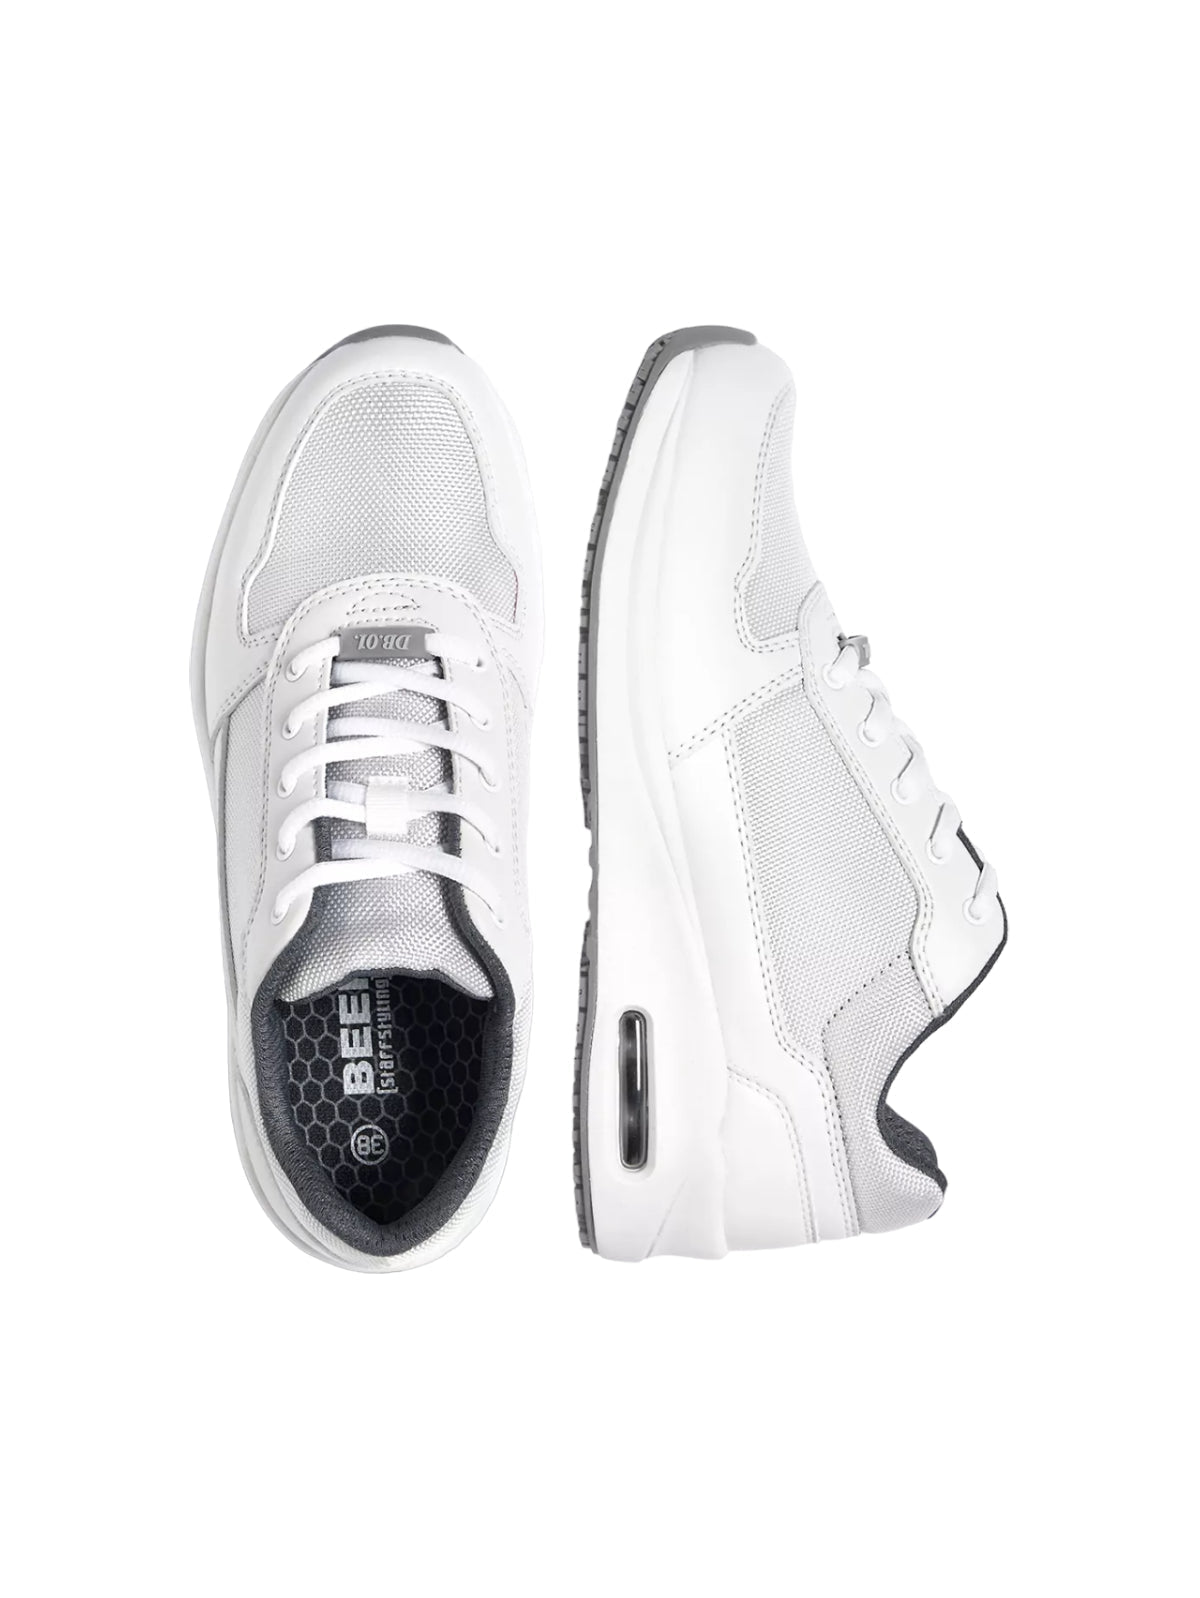 Work Sneaker DB.01 White by New -  ChefsCotton